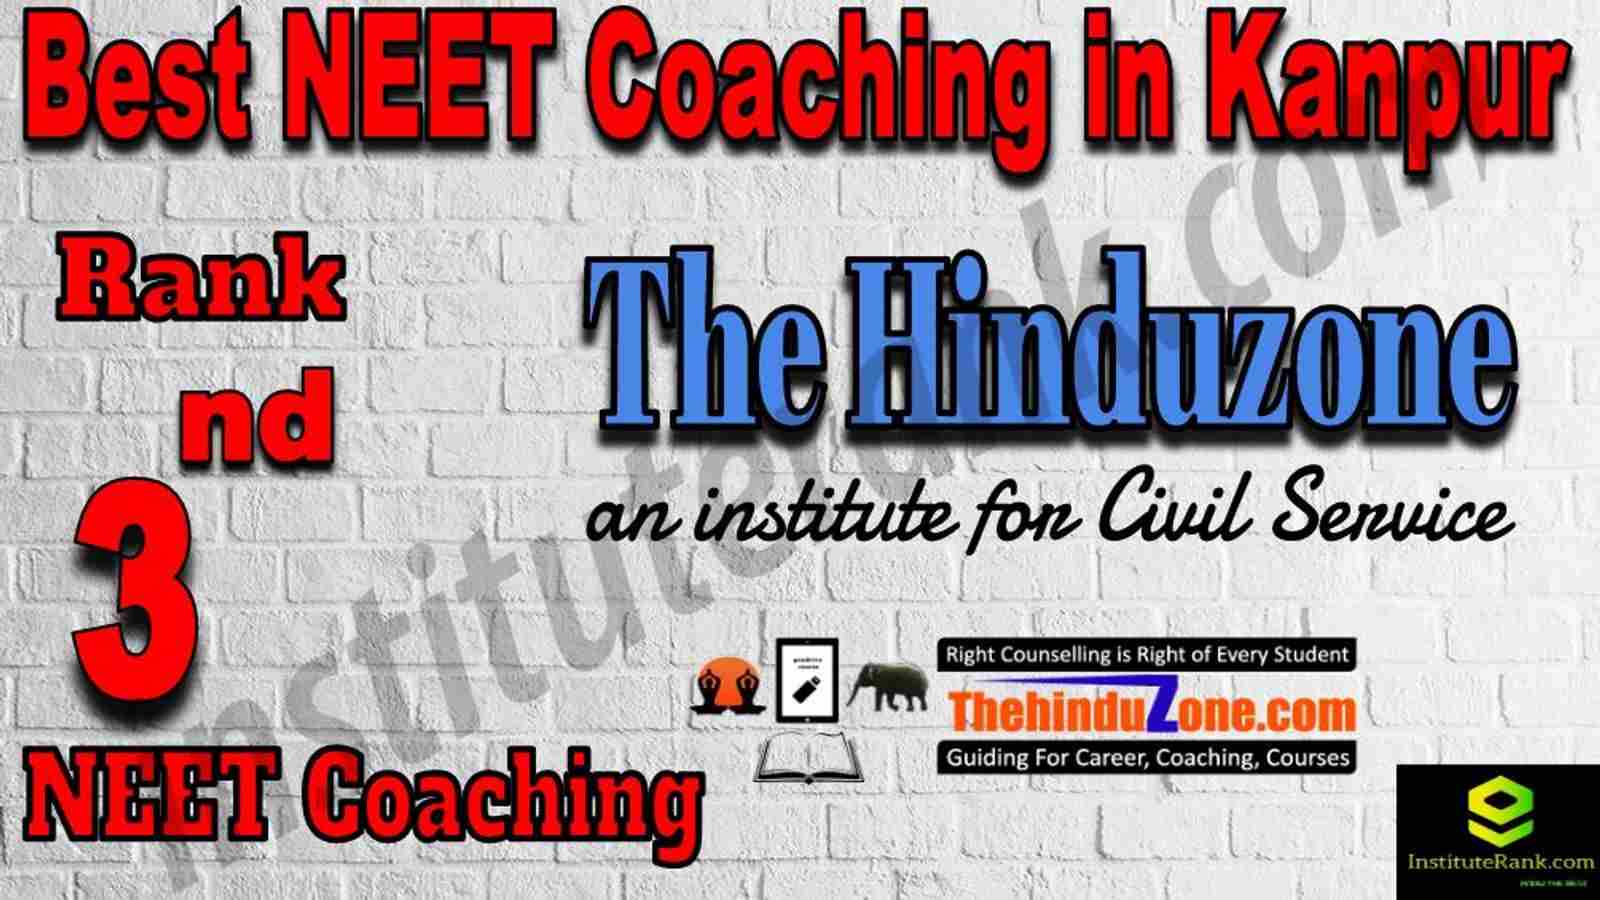 3rd Best Neet Coaching in Kanpur